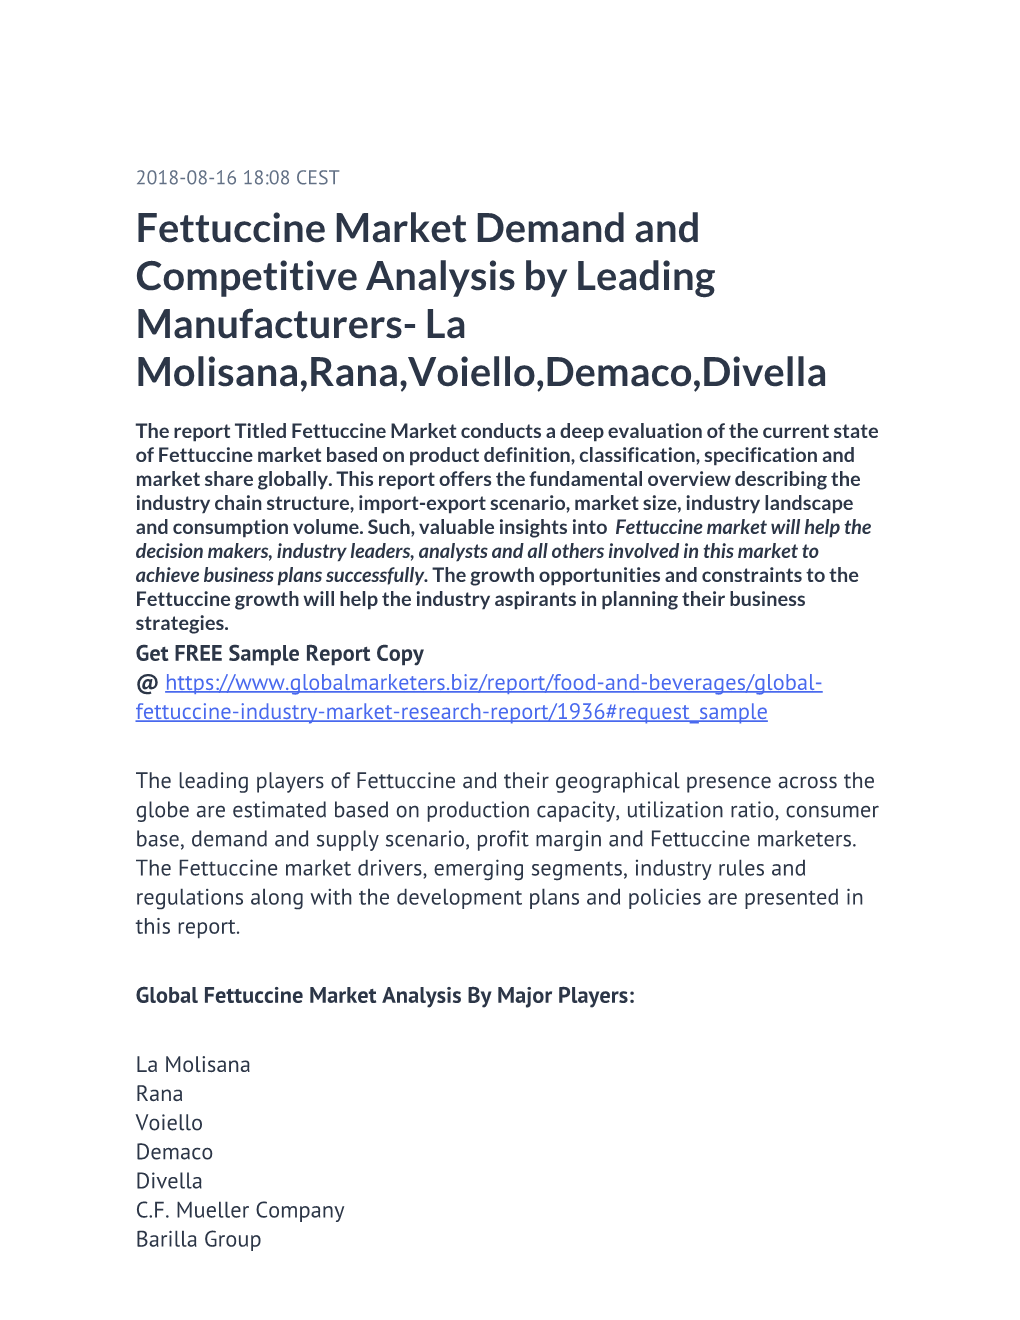 Fettuccine Market Demand and Competitive Analysis by Leading Manufacturers- La Molisana,Rana,Voiello,Demaco,Divella